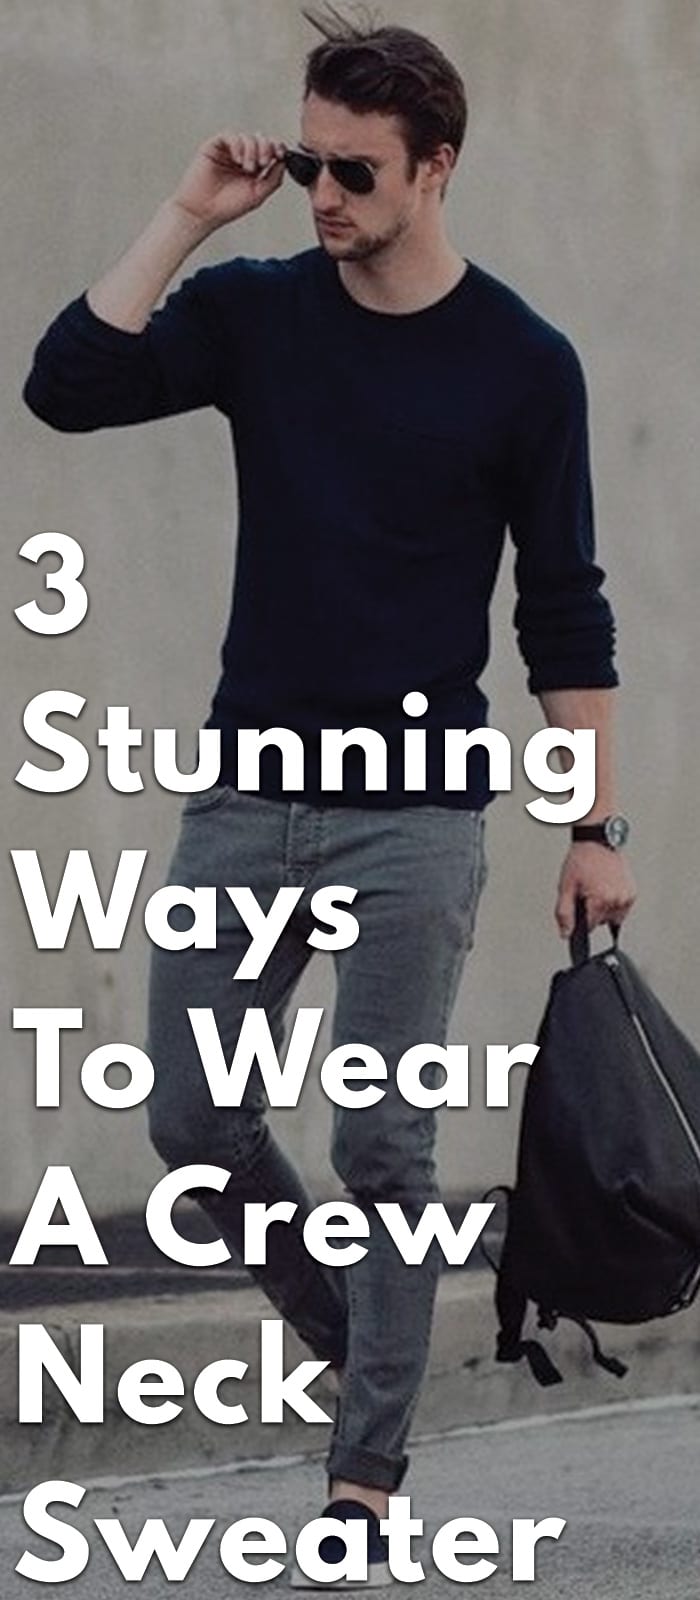 3-Stunning-Ways-to-Wear-a-Crew-Neck-Sweater